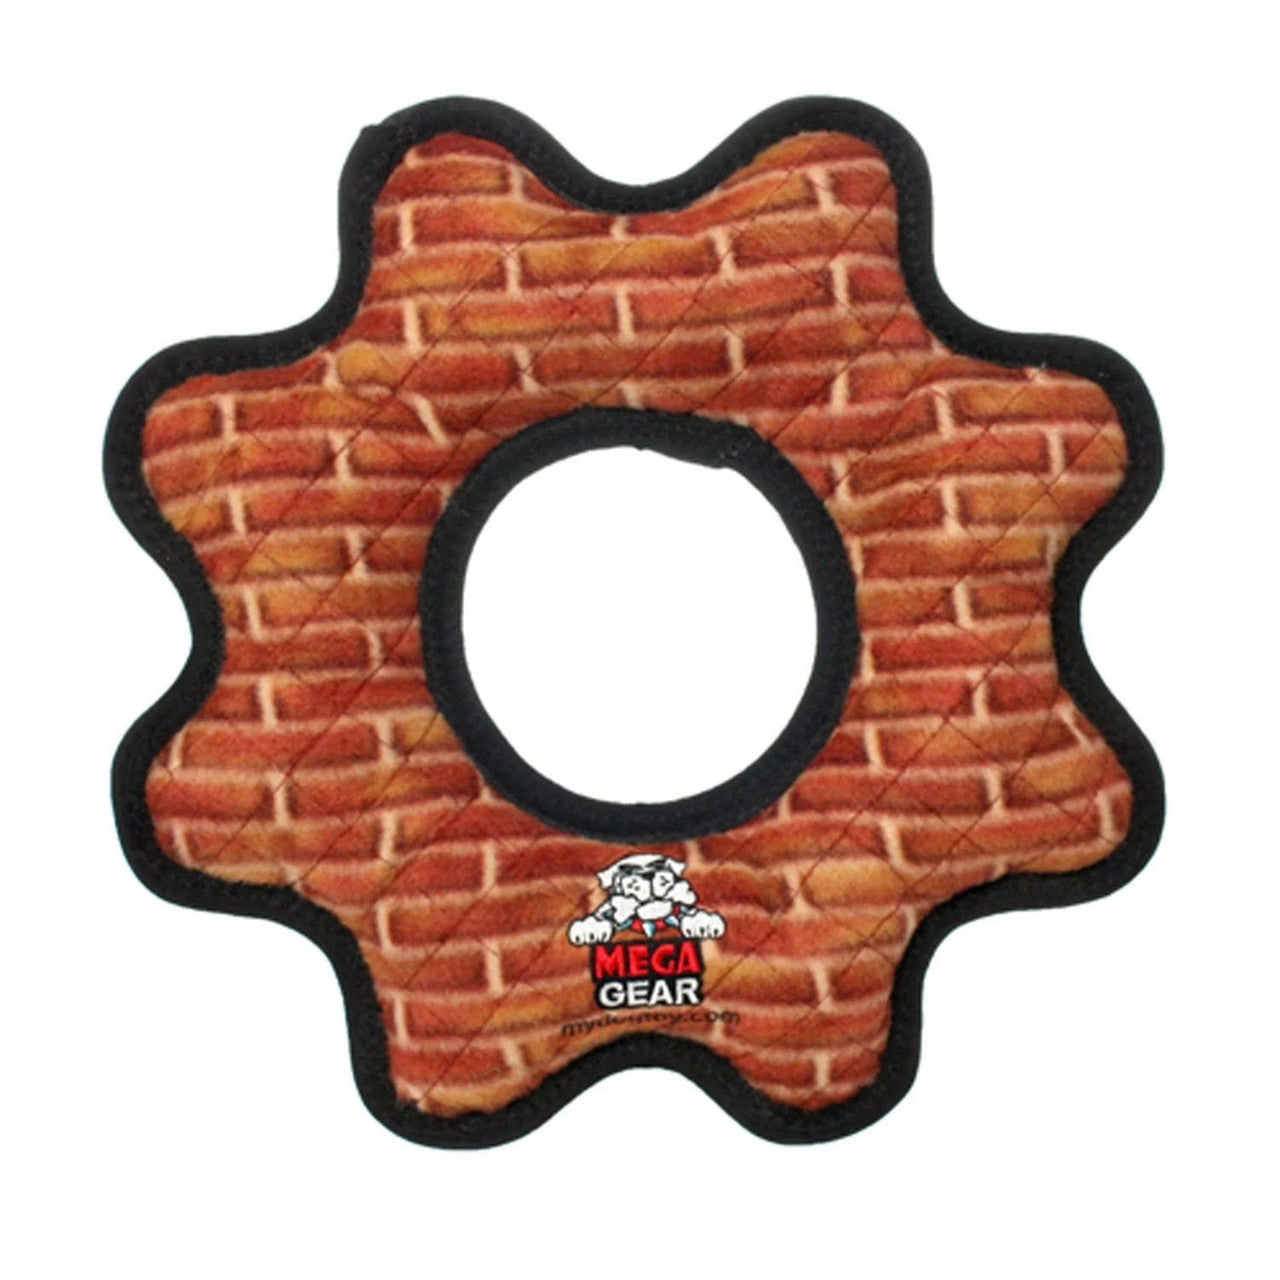 Tuffy Mega Gear Ring Brick 180181905254